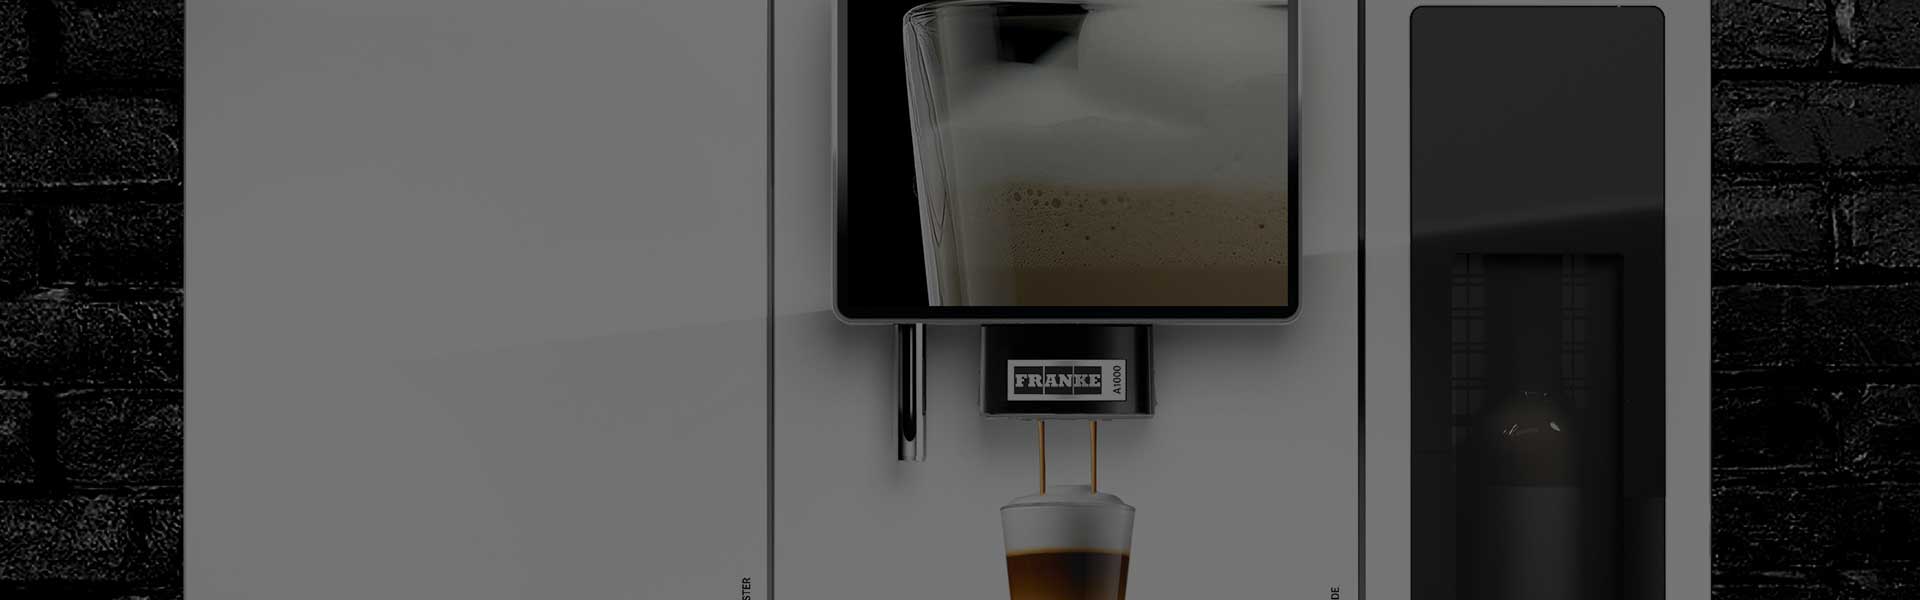 Franke kaffemaskine